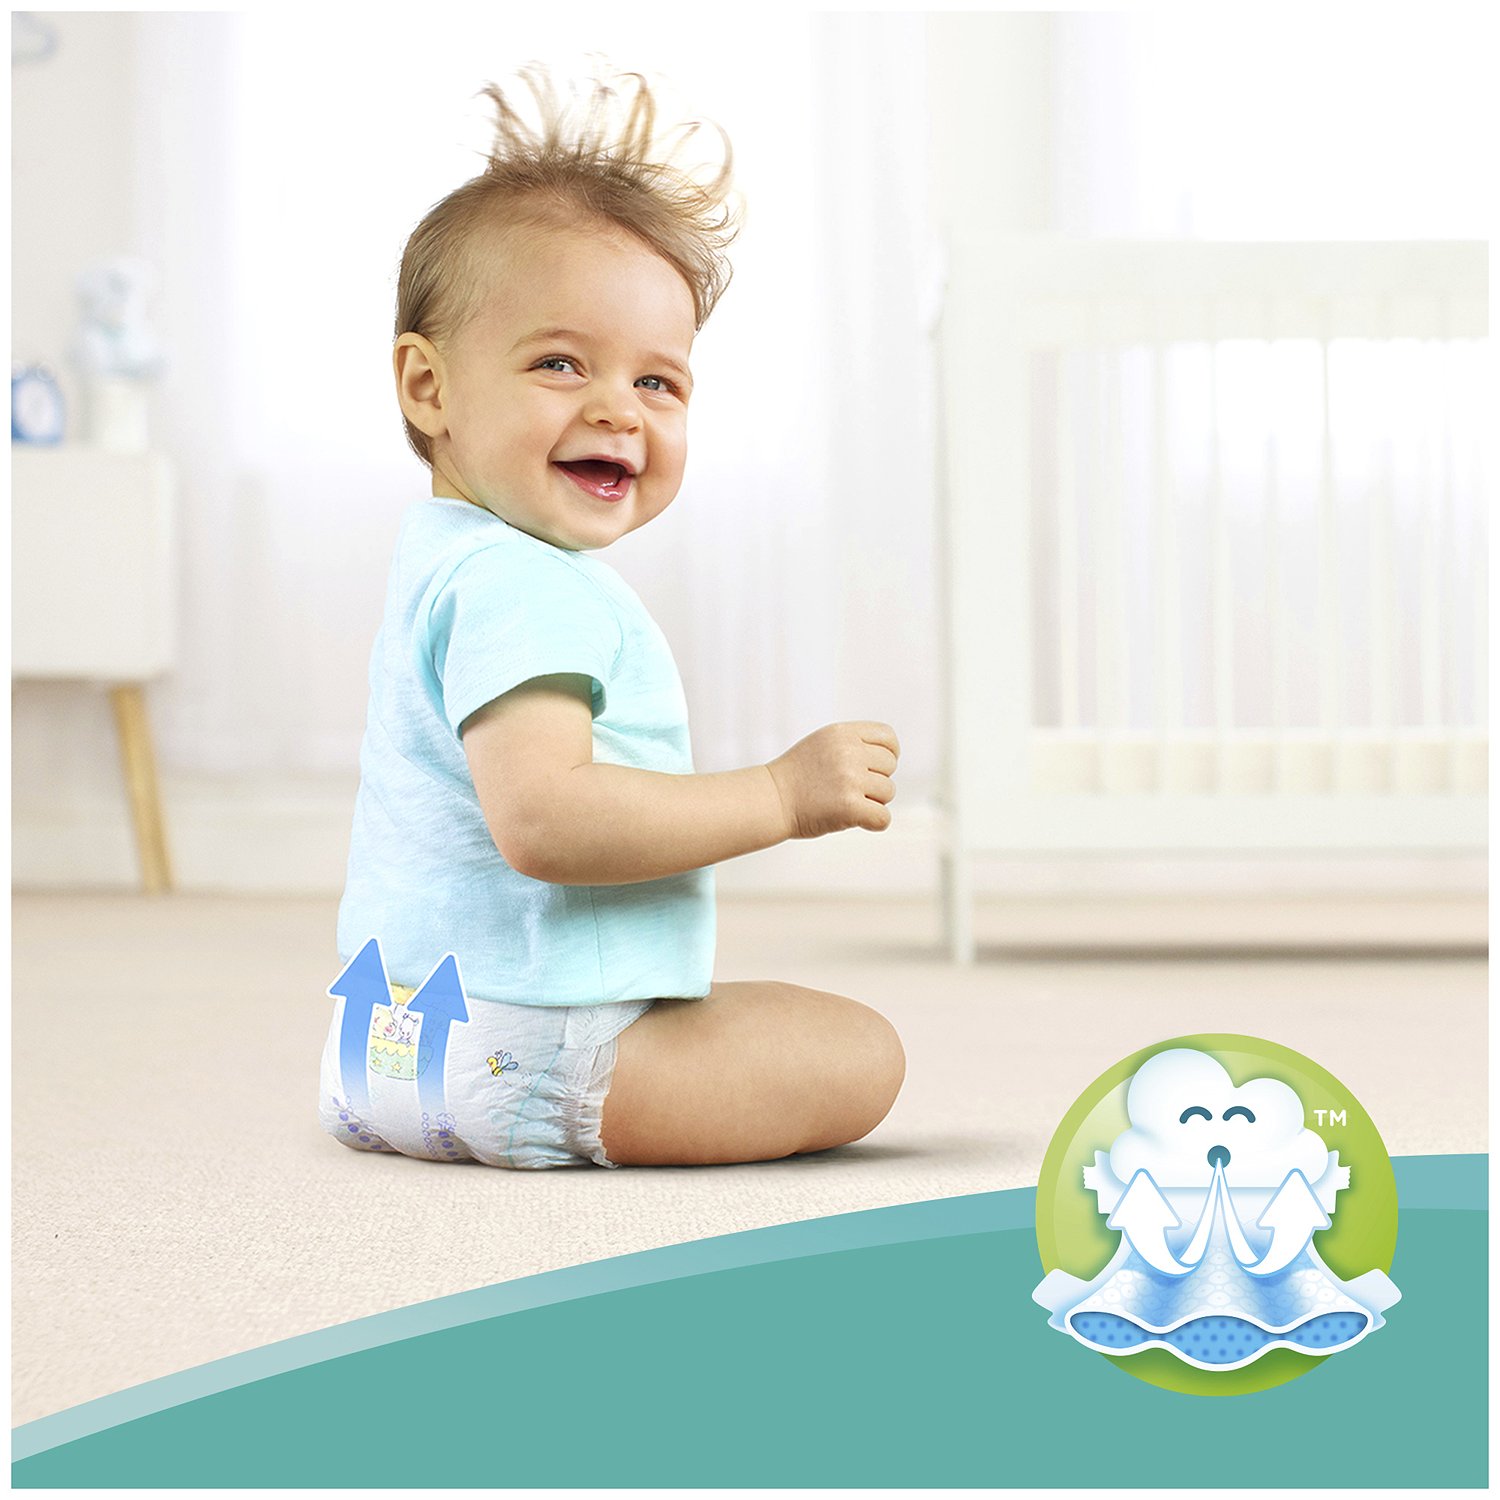 Подгузники Pampers Active Baby-Dry 4 9-14кг 20шт